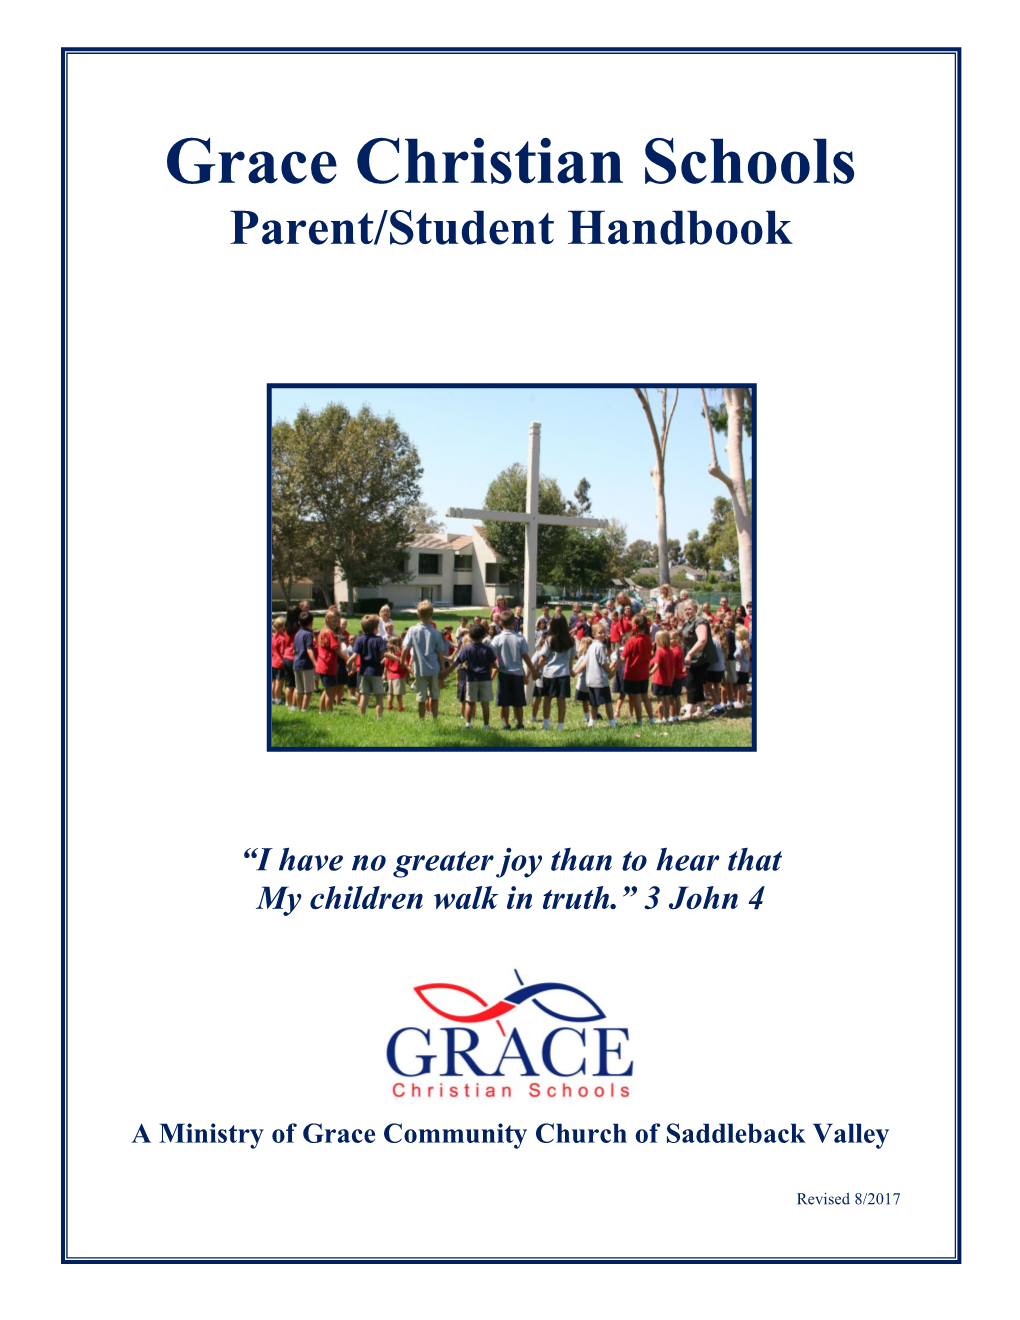 Grace Christian Schools Parent/Student Handbook